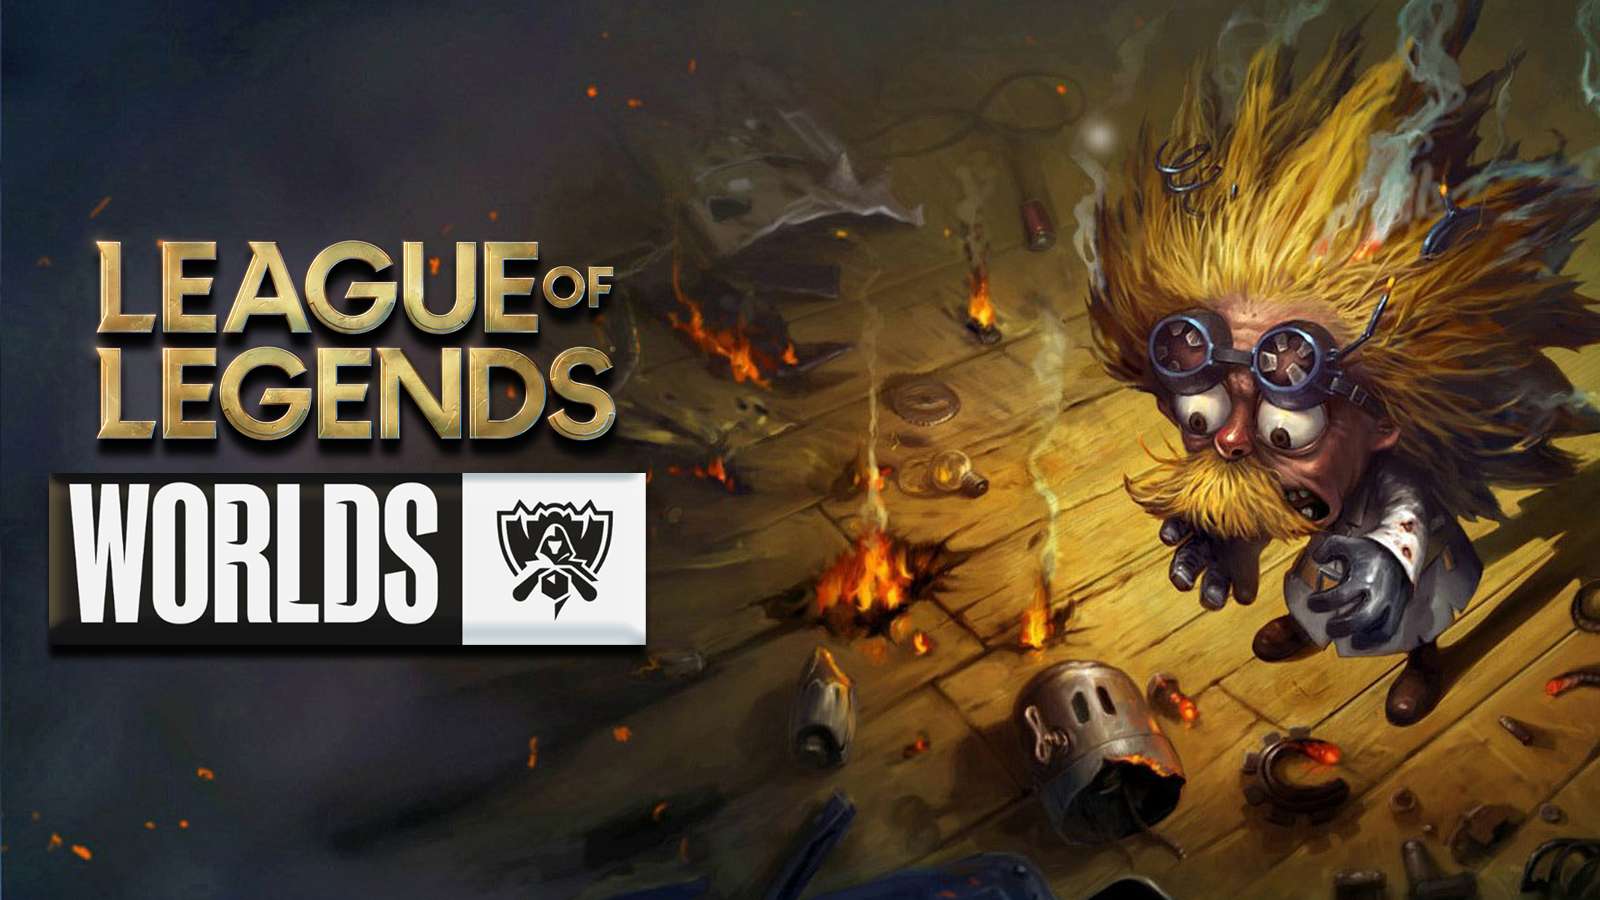 bugs worlds league of legends